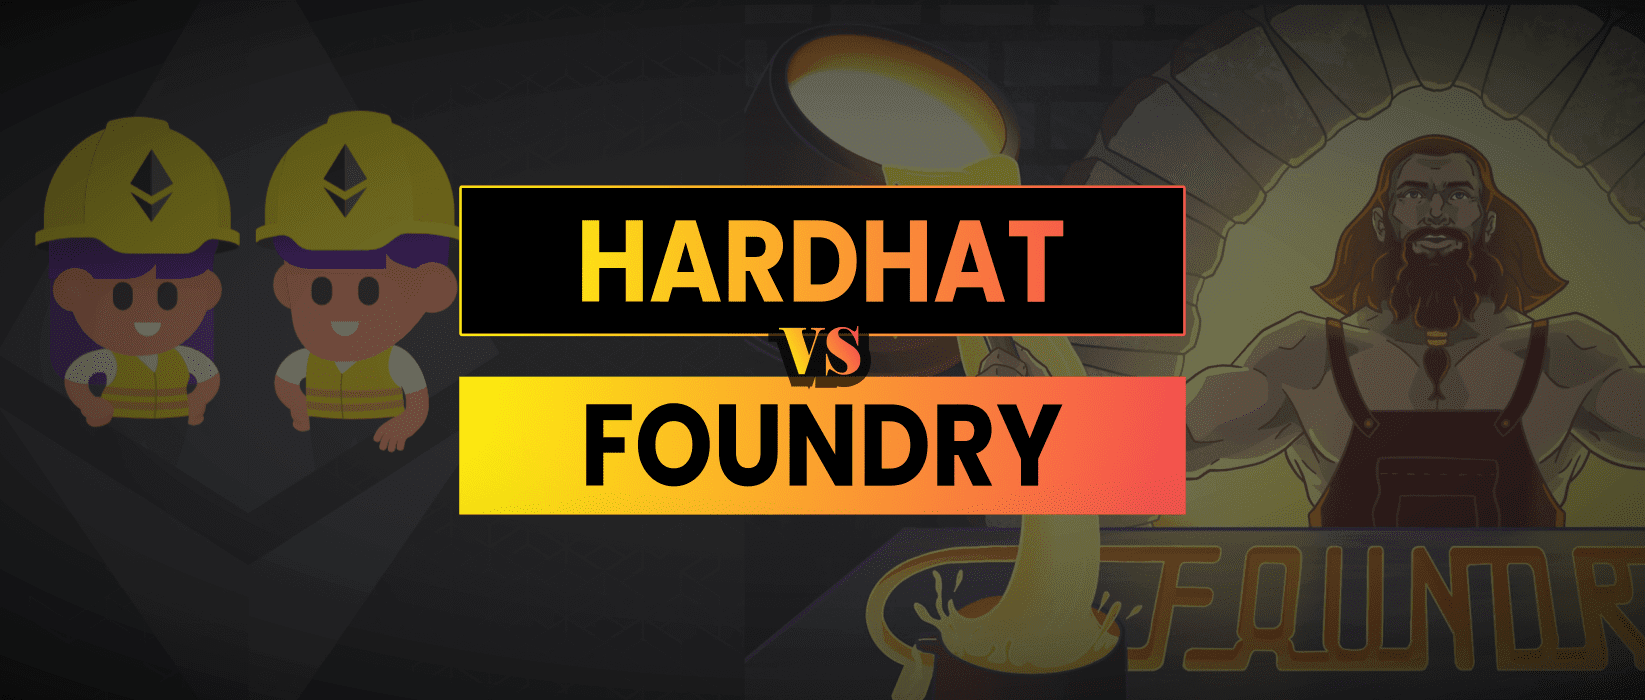 Hardhat vs Foundry